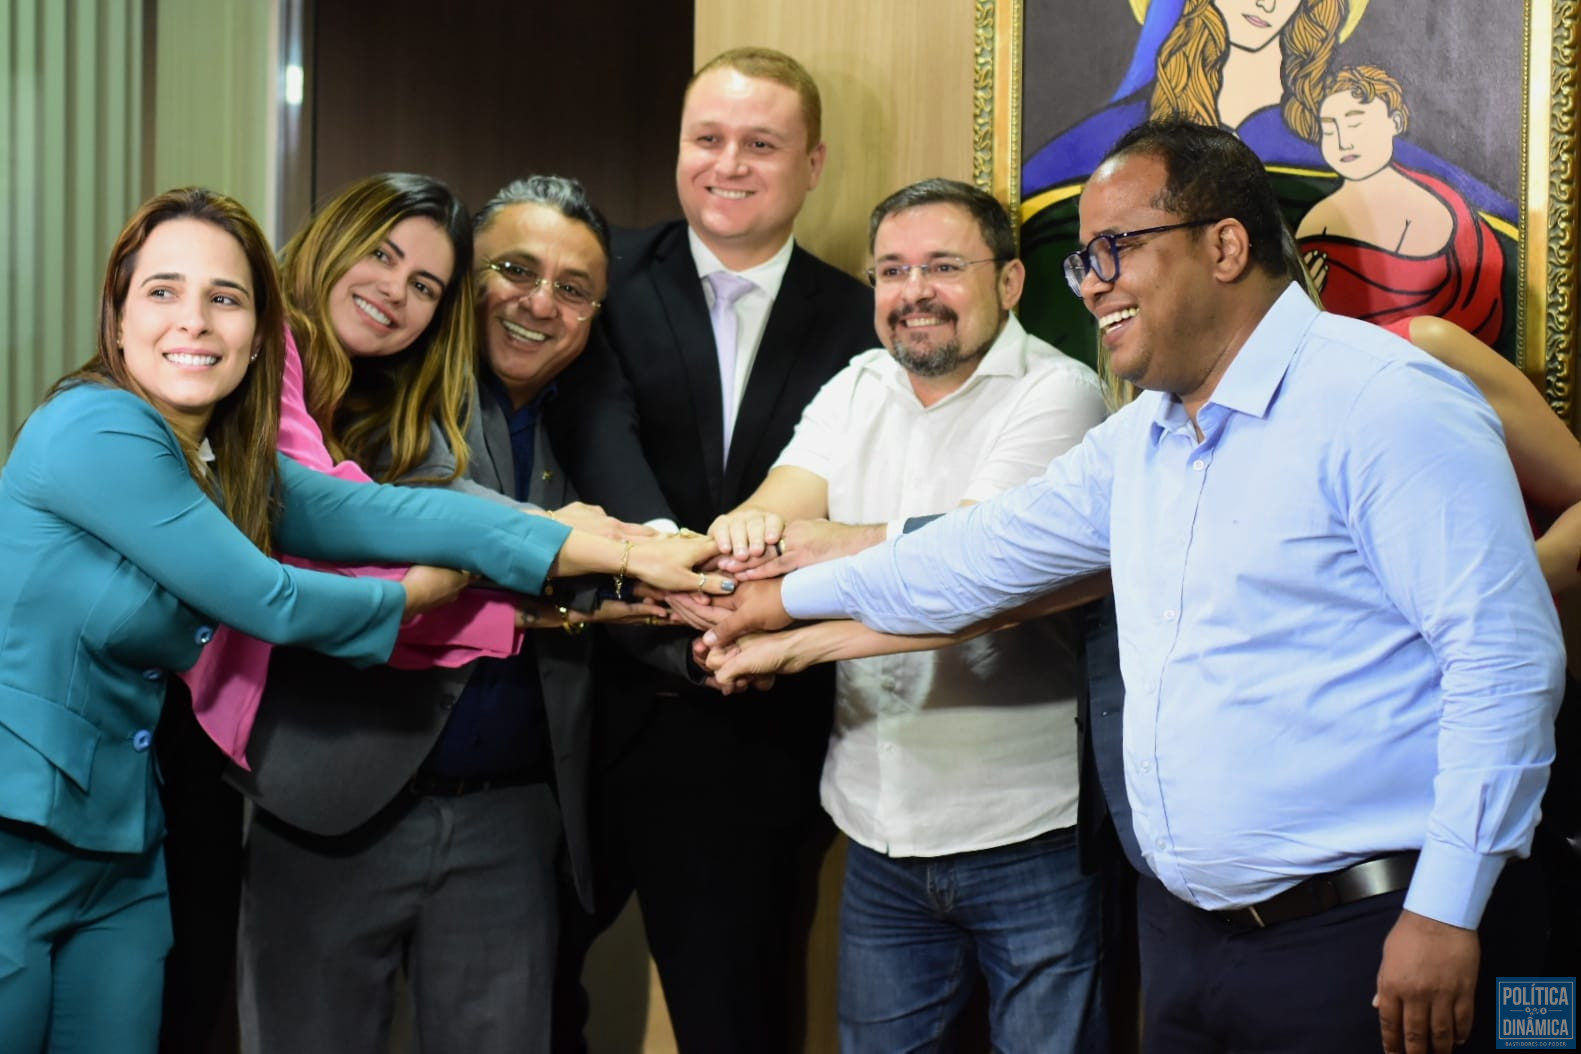 Pollyana Rocha 9de rosa) agora é aliada do deputado estadual Fábio Novo (de branco), pré-candidato a prefeito de Teresina (foto: Jailson Soares | PD)